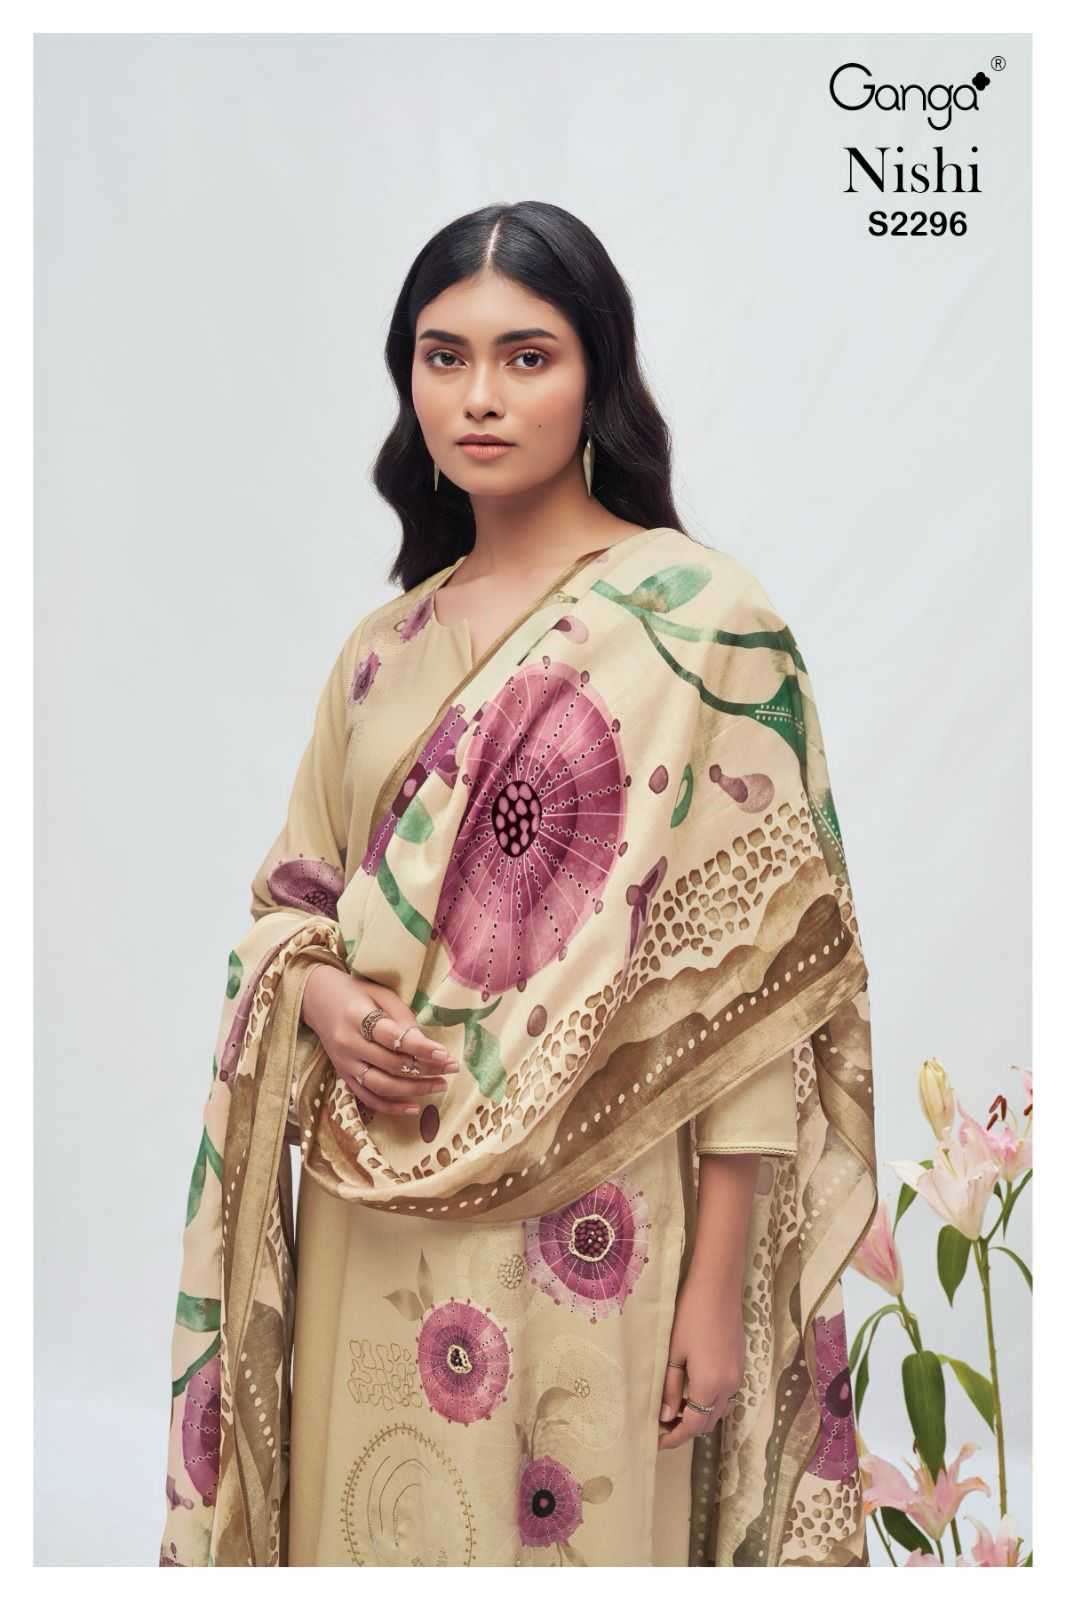 Ganga nishi 2296 wool pashmina print suit